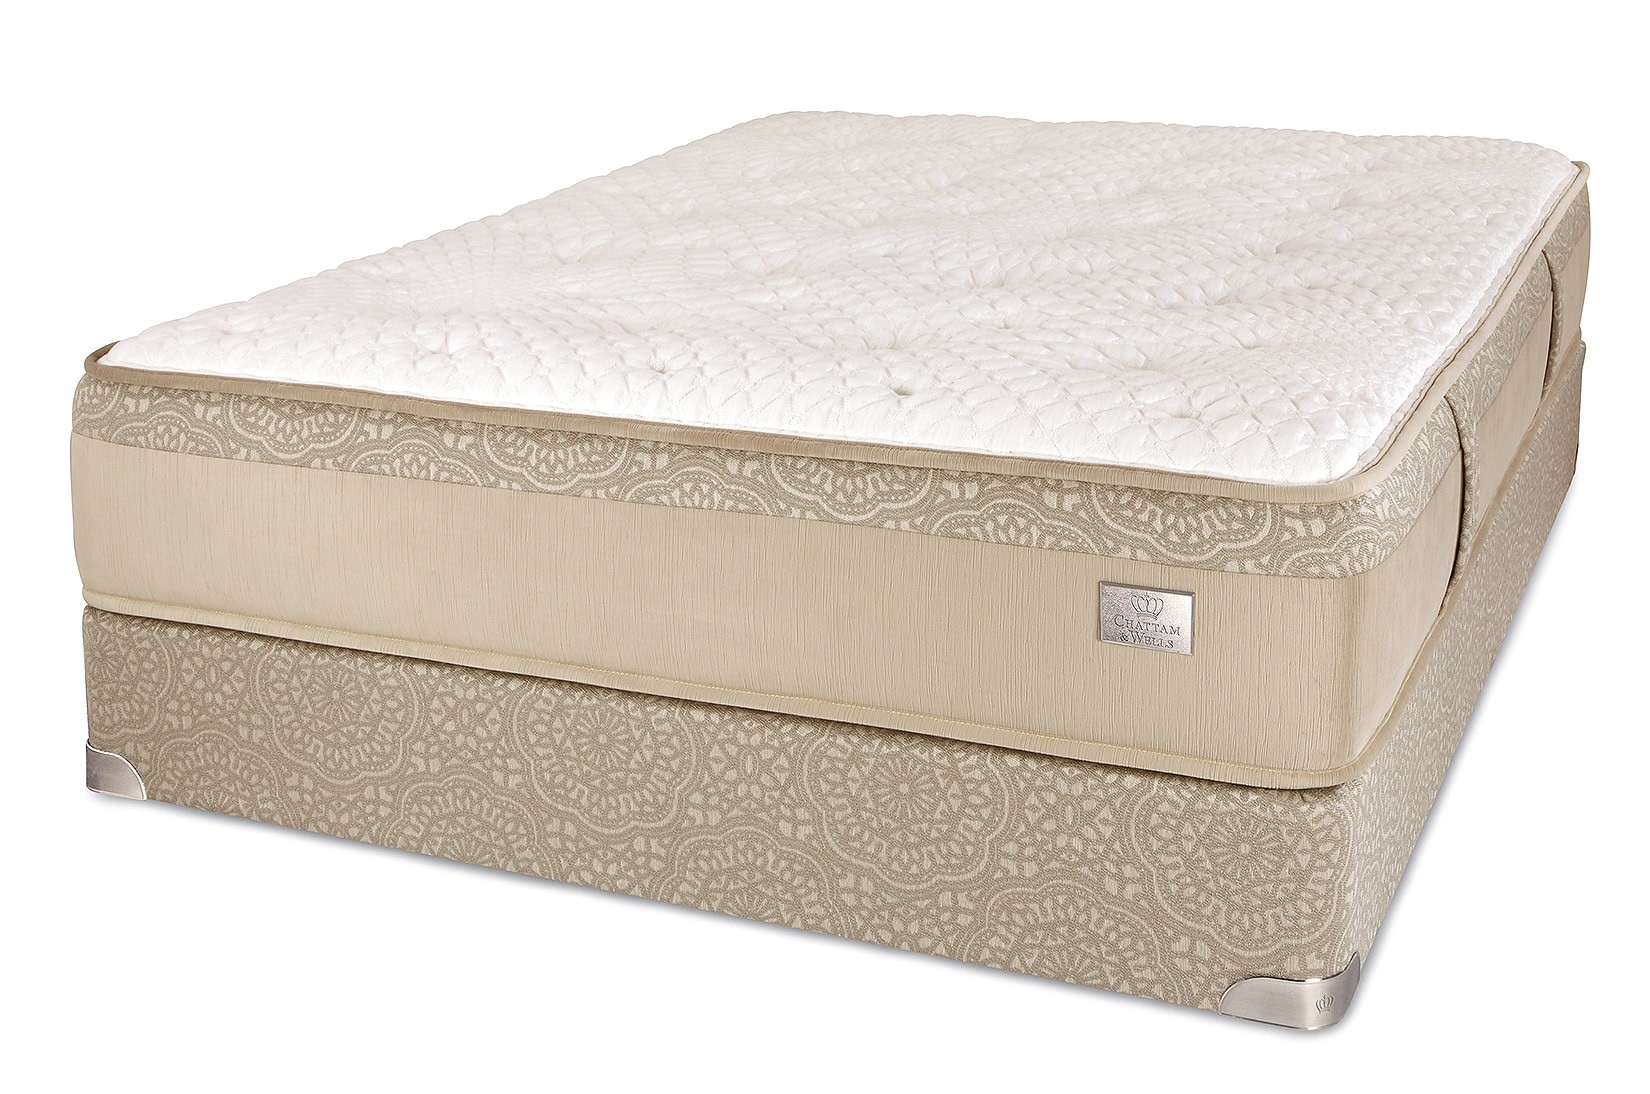 olivia firm mattress made in usa